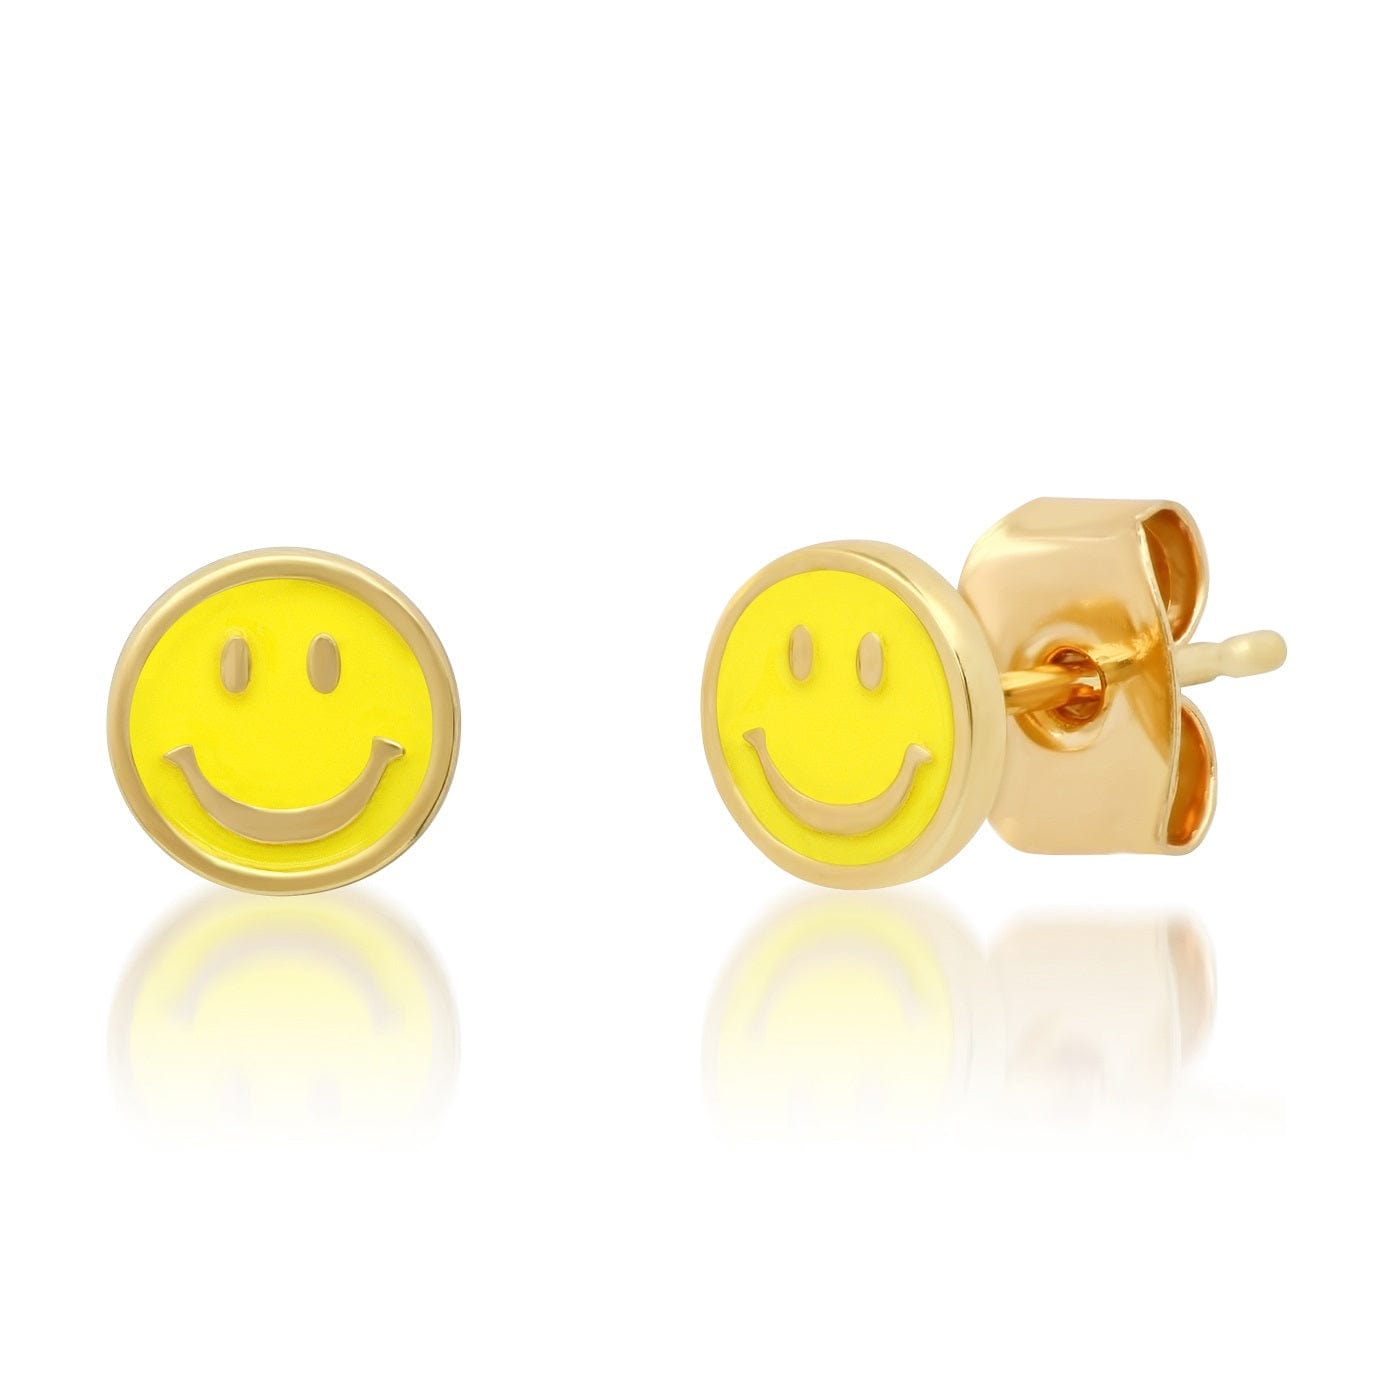 TAI JEWELRY Earrings Yellow Enamel Smiley Face Studs